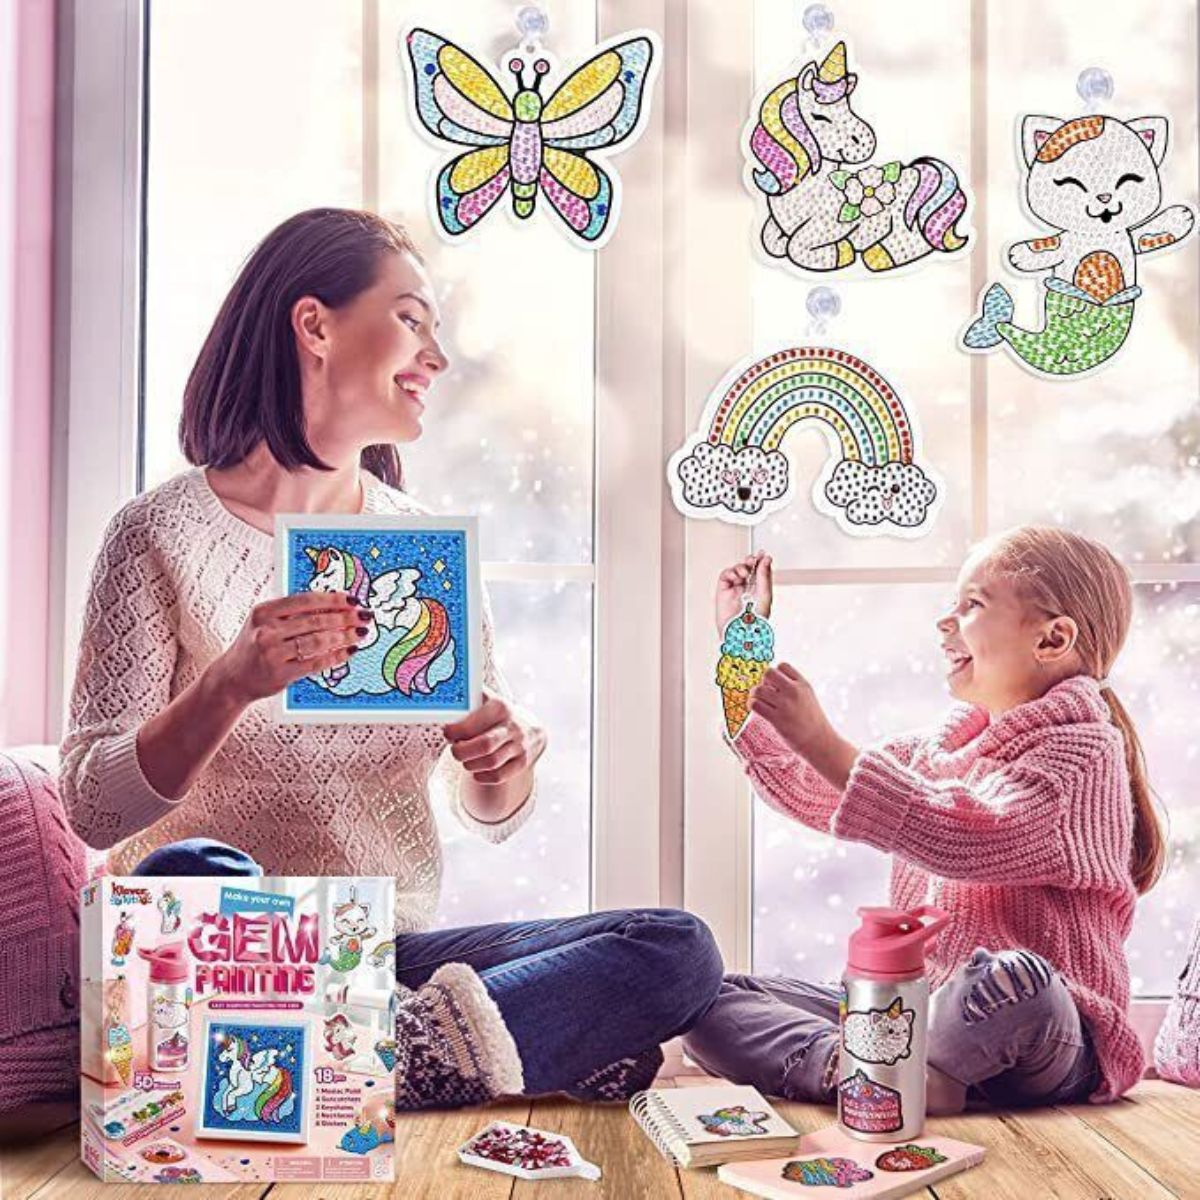 Gem Diamond Painting Stickers for Girls